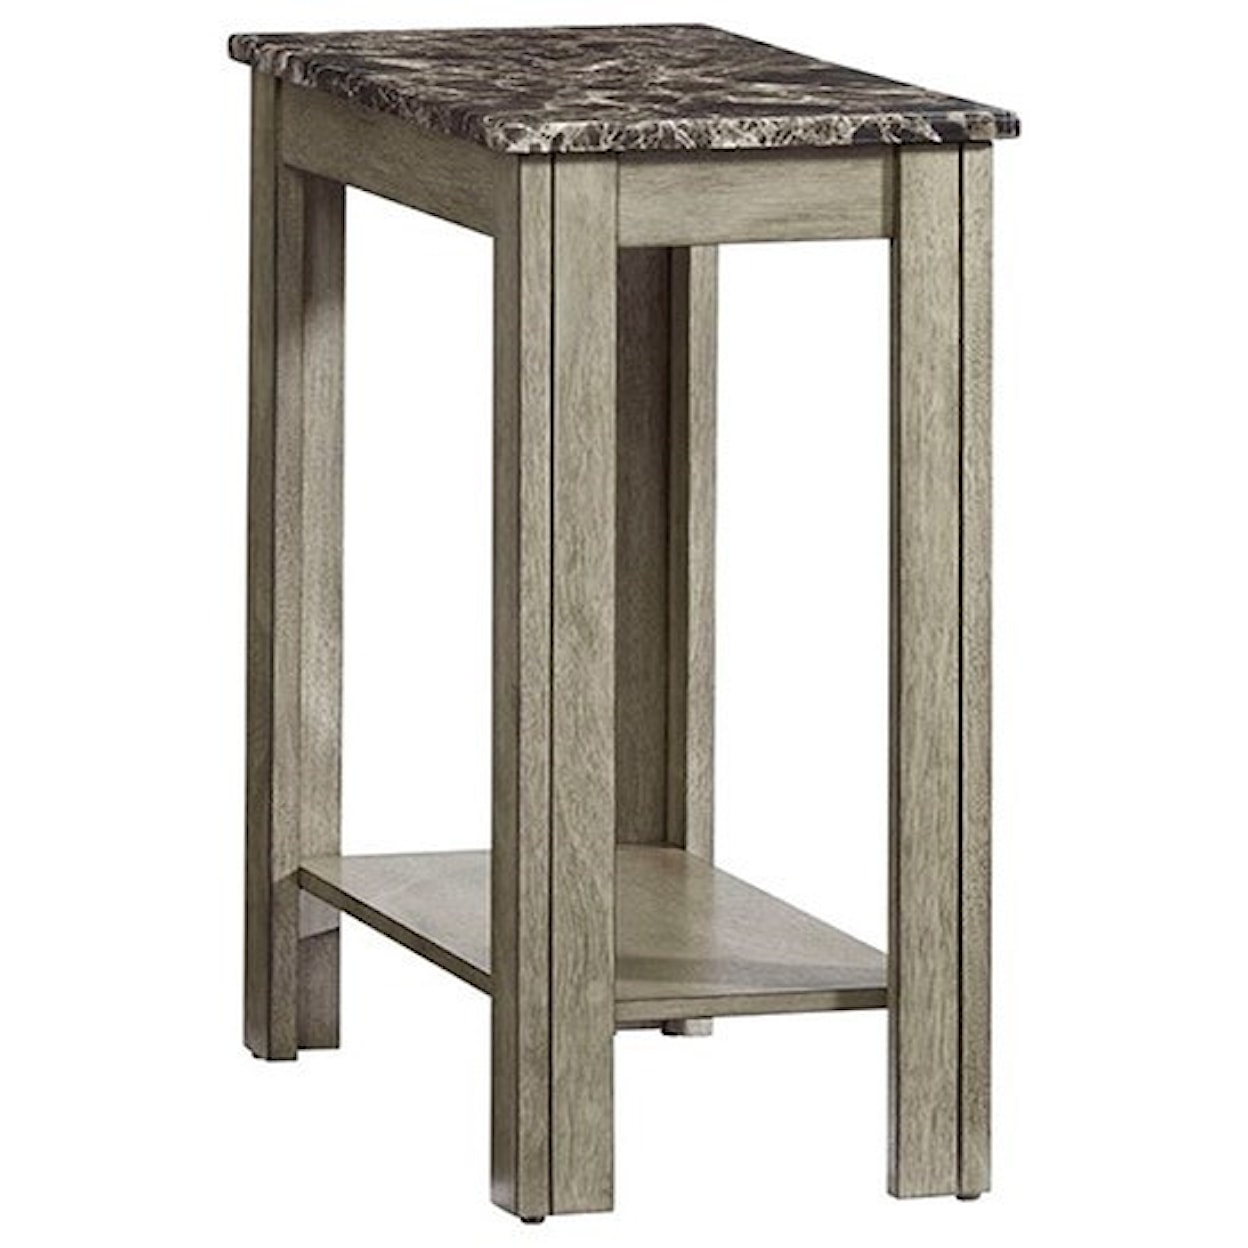 Progressive Furniture Chairsides III Chairside Table